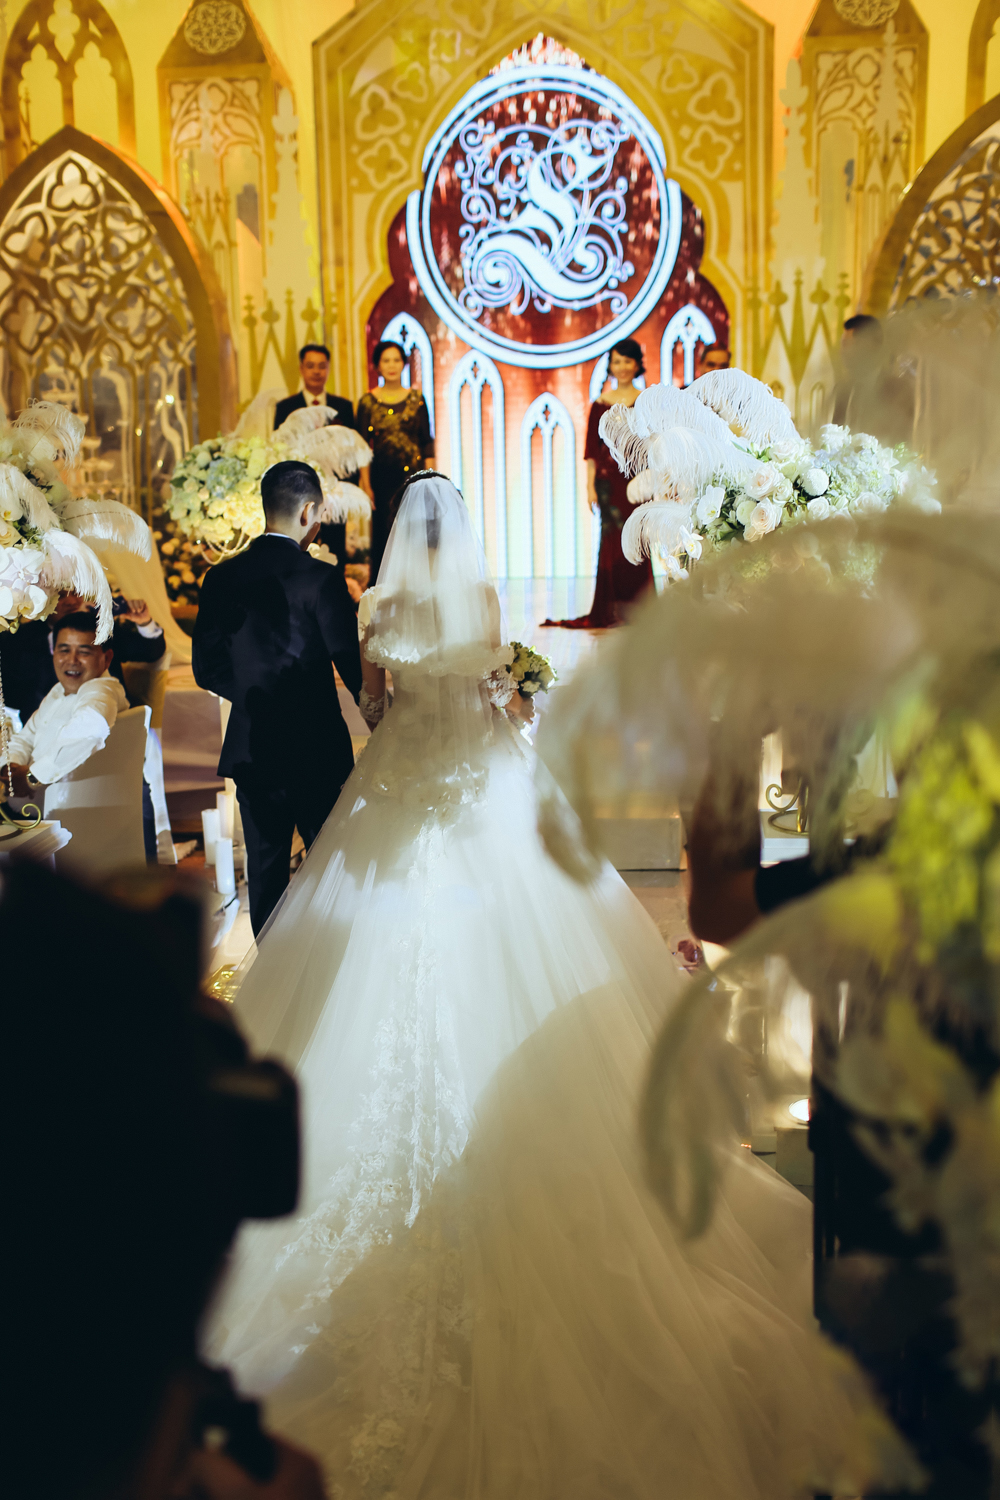 WEDDING CEREMONY ( Tú Linh & Hoàng Long )